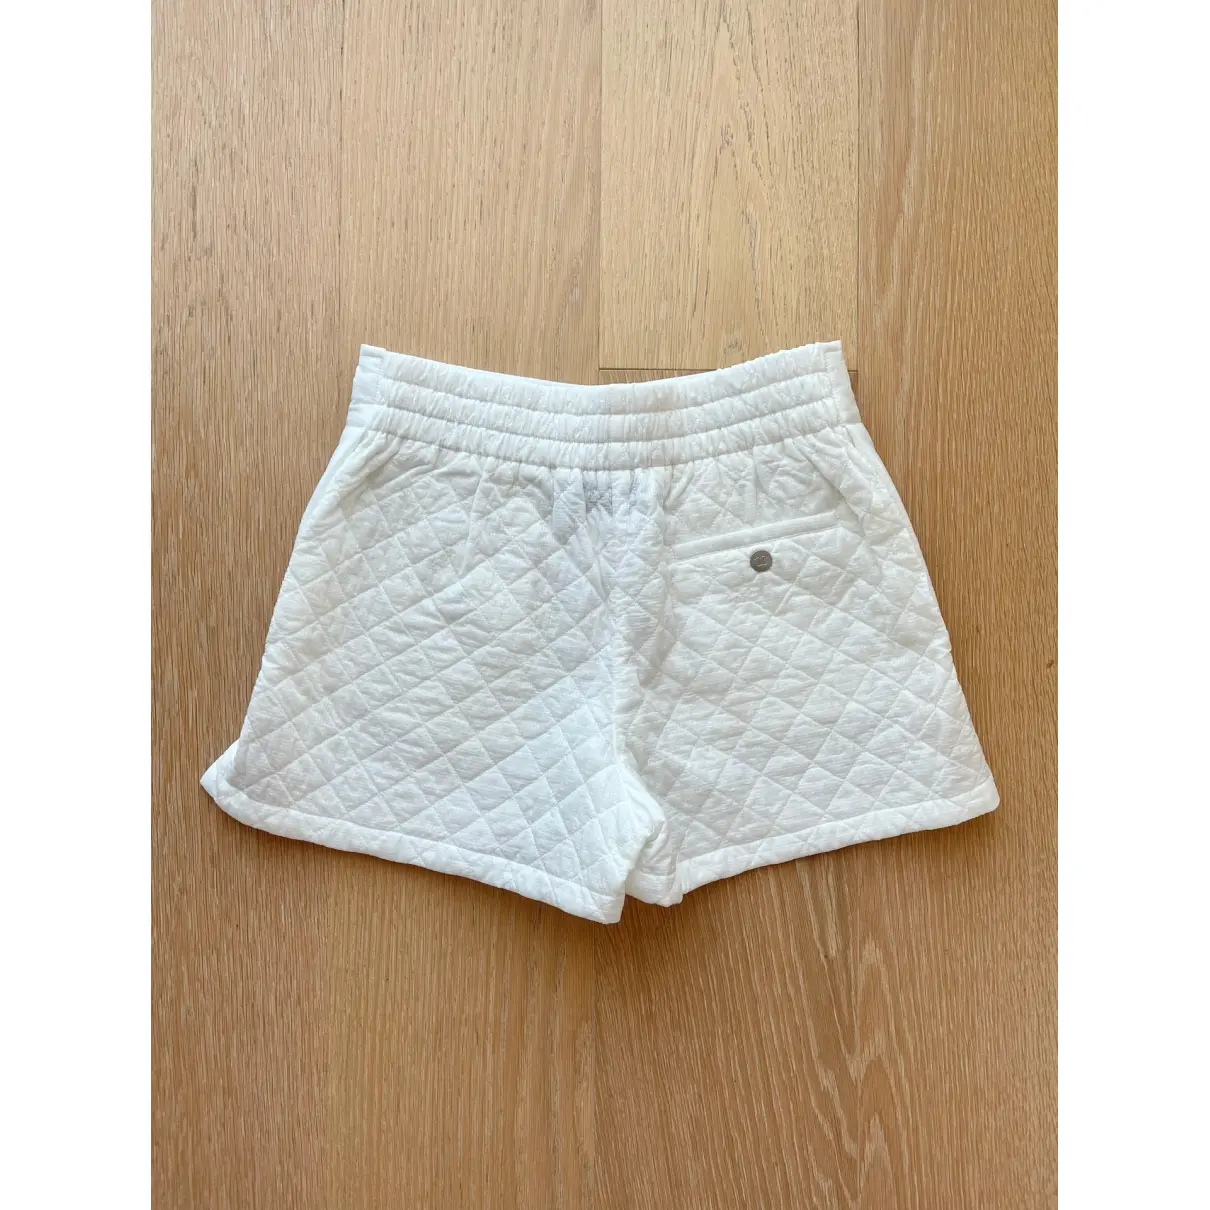 Buy Chanel Shorts online